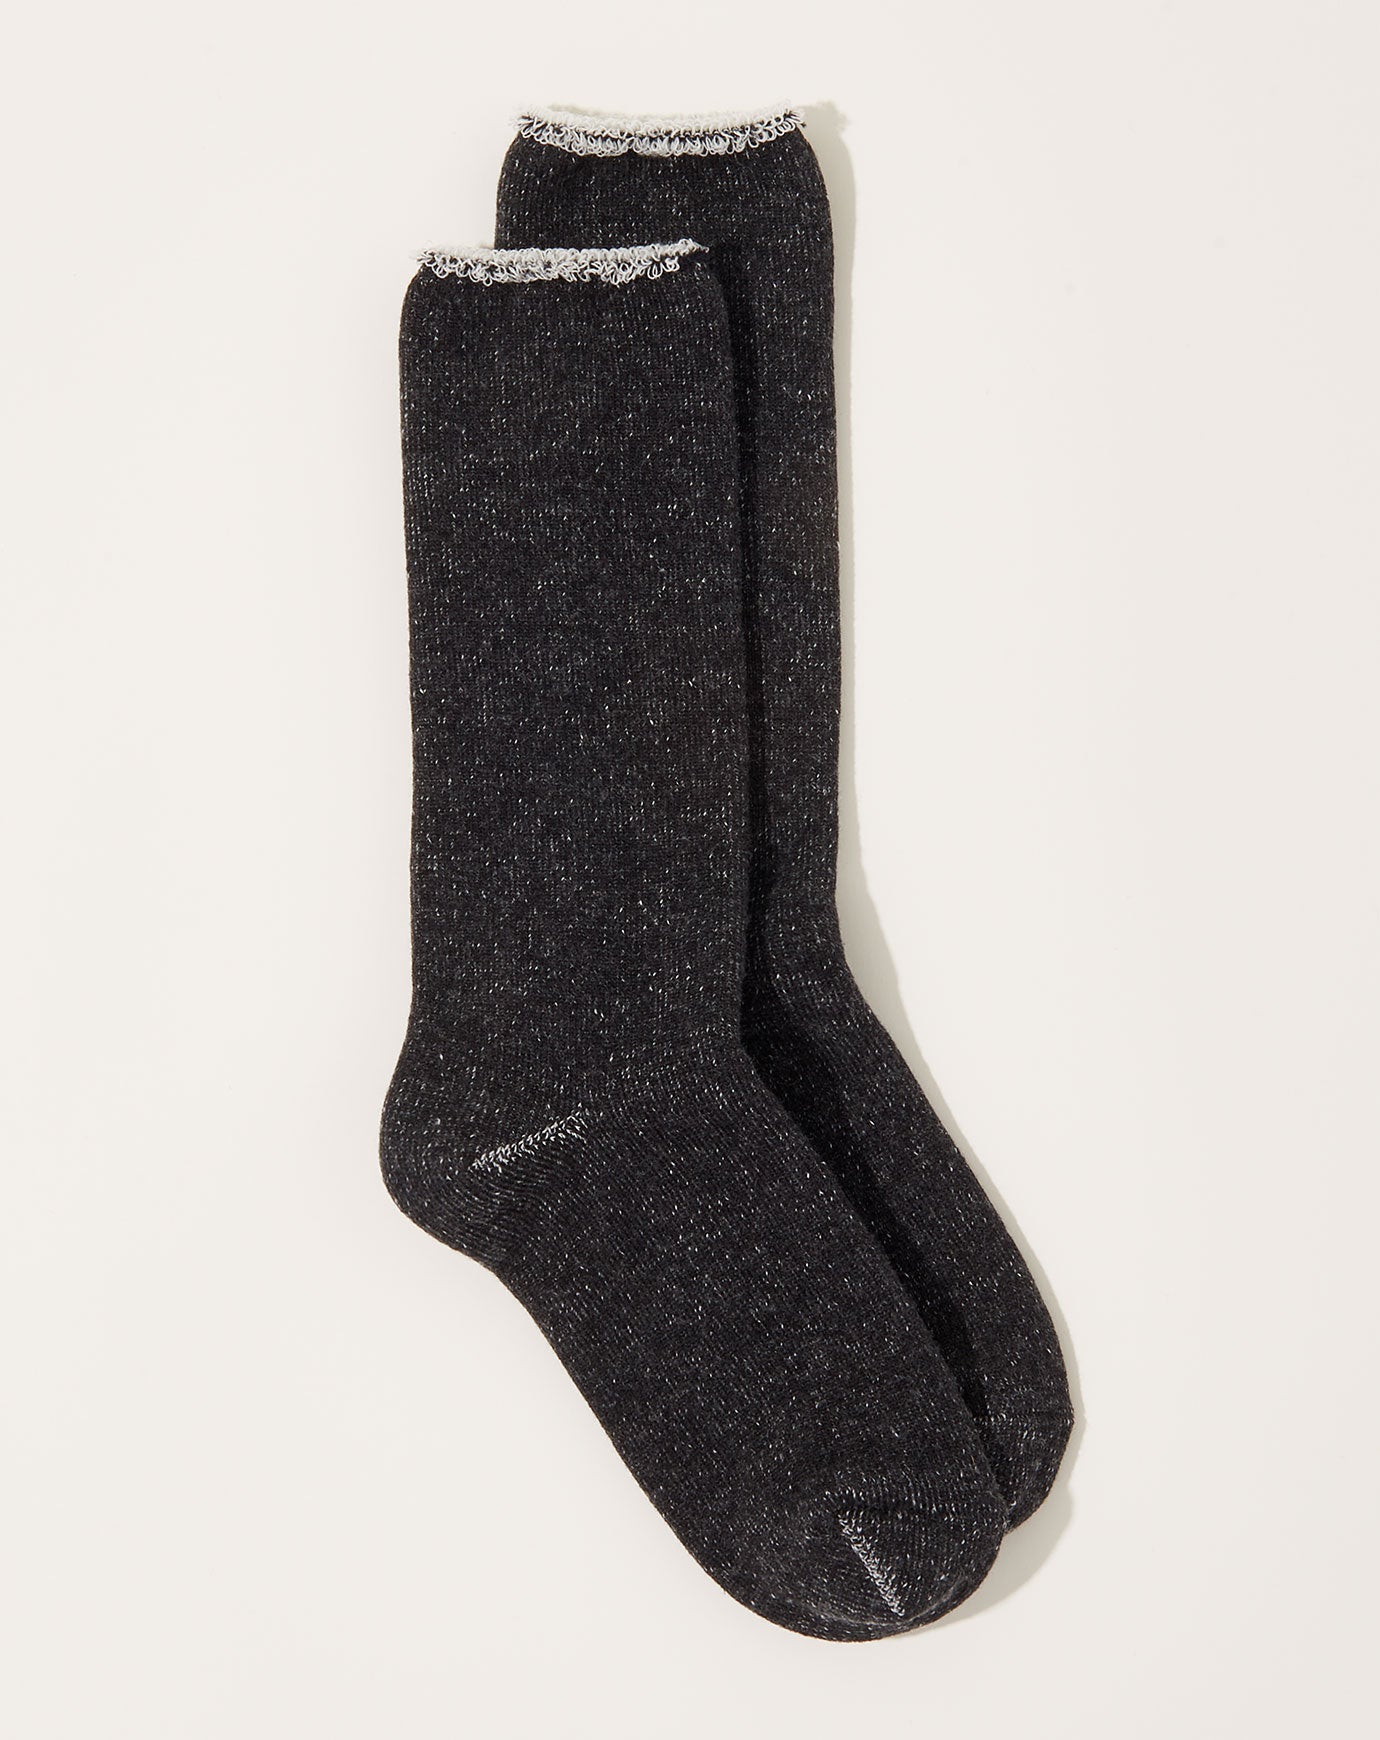 Hakne Cotton Wool Pile Socks in Charcoal